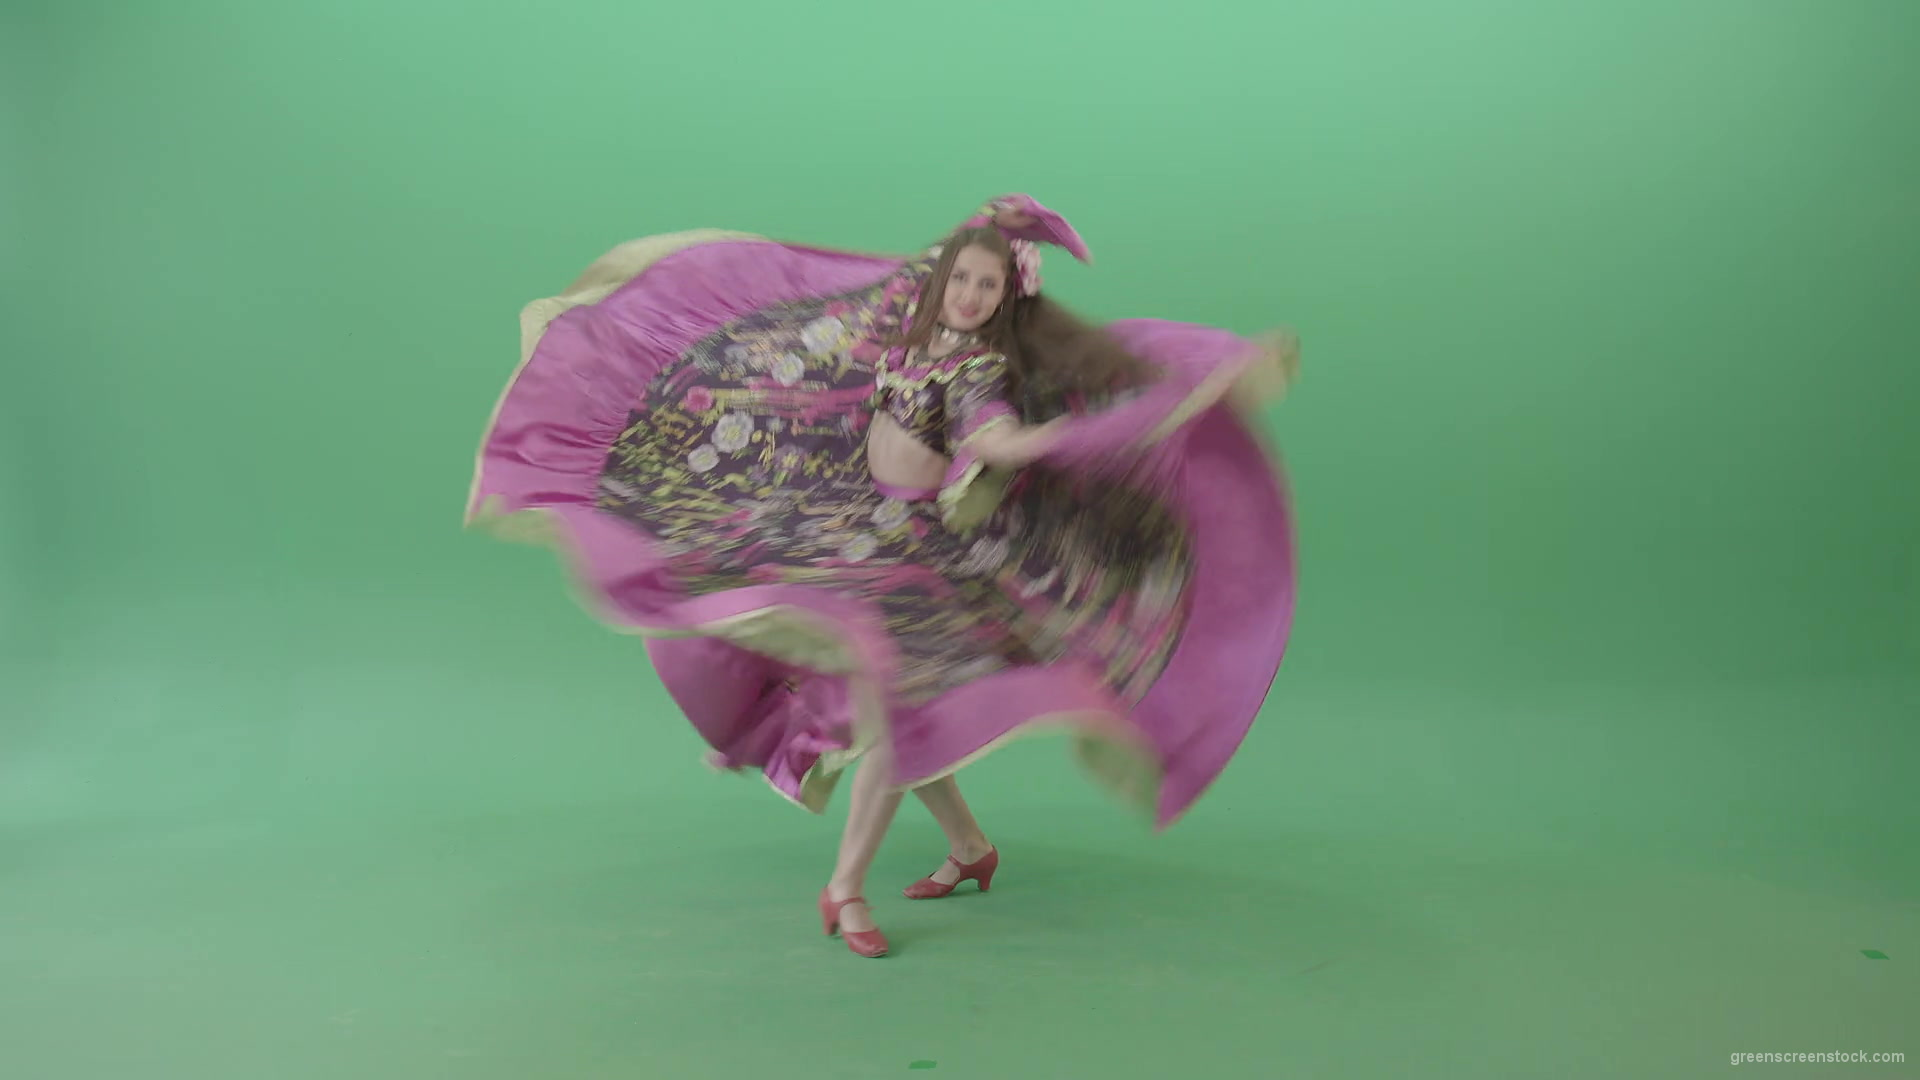 Beautiful-girl-in-balkan-pink-dress-dancing-gypsy-folk-dance-isolated-on-green-screen-4K-Video-Clip-1920_004 Green Screen Stock